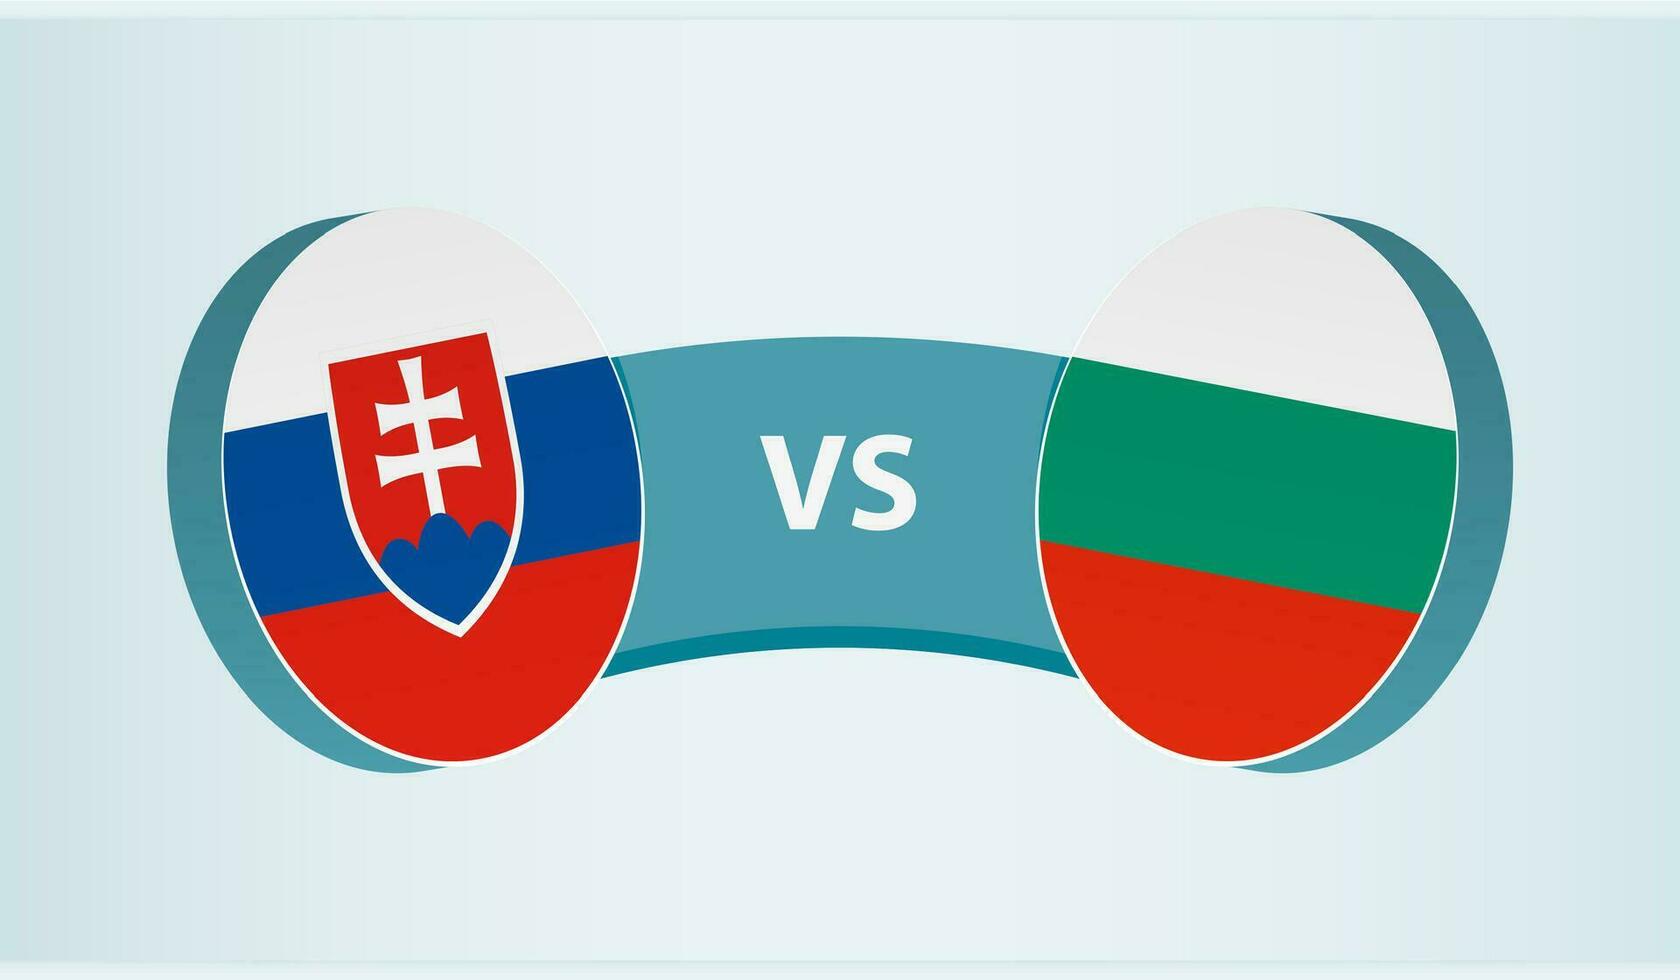 Slovakia versus Bulgaria, team sports competition concept. vector